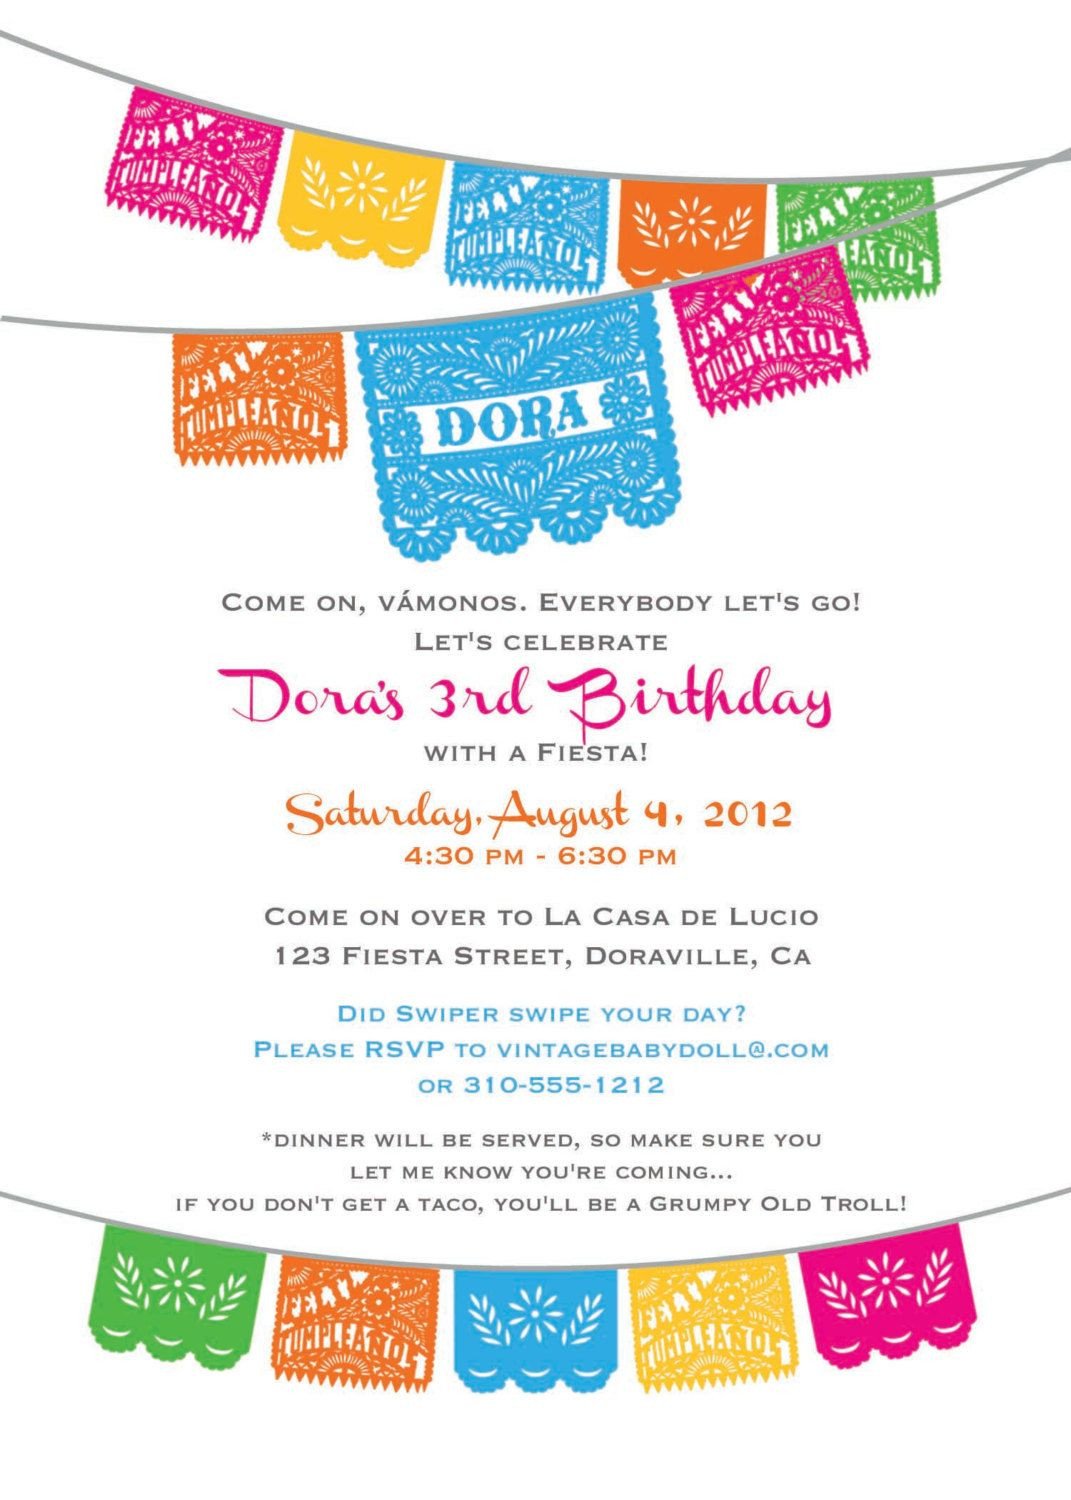 DORA BIRTHDAY Fiesta Invitation cinco de mayo by